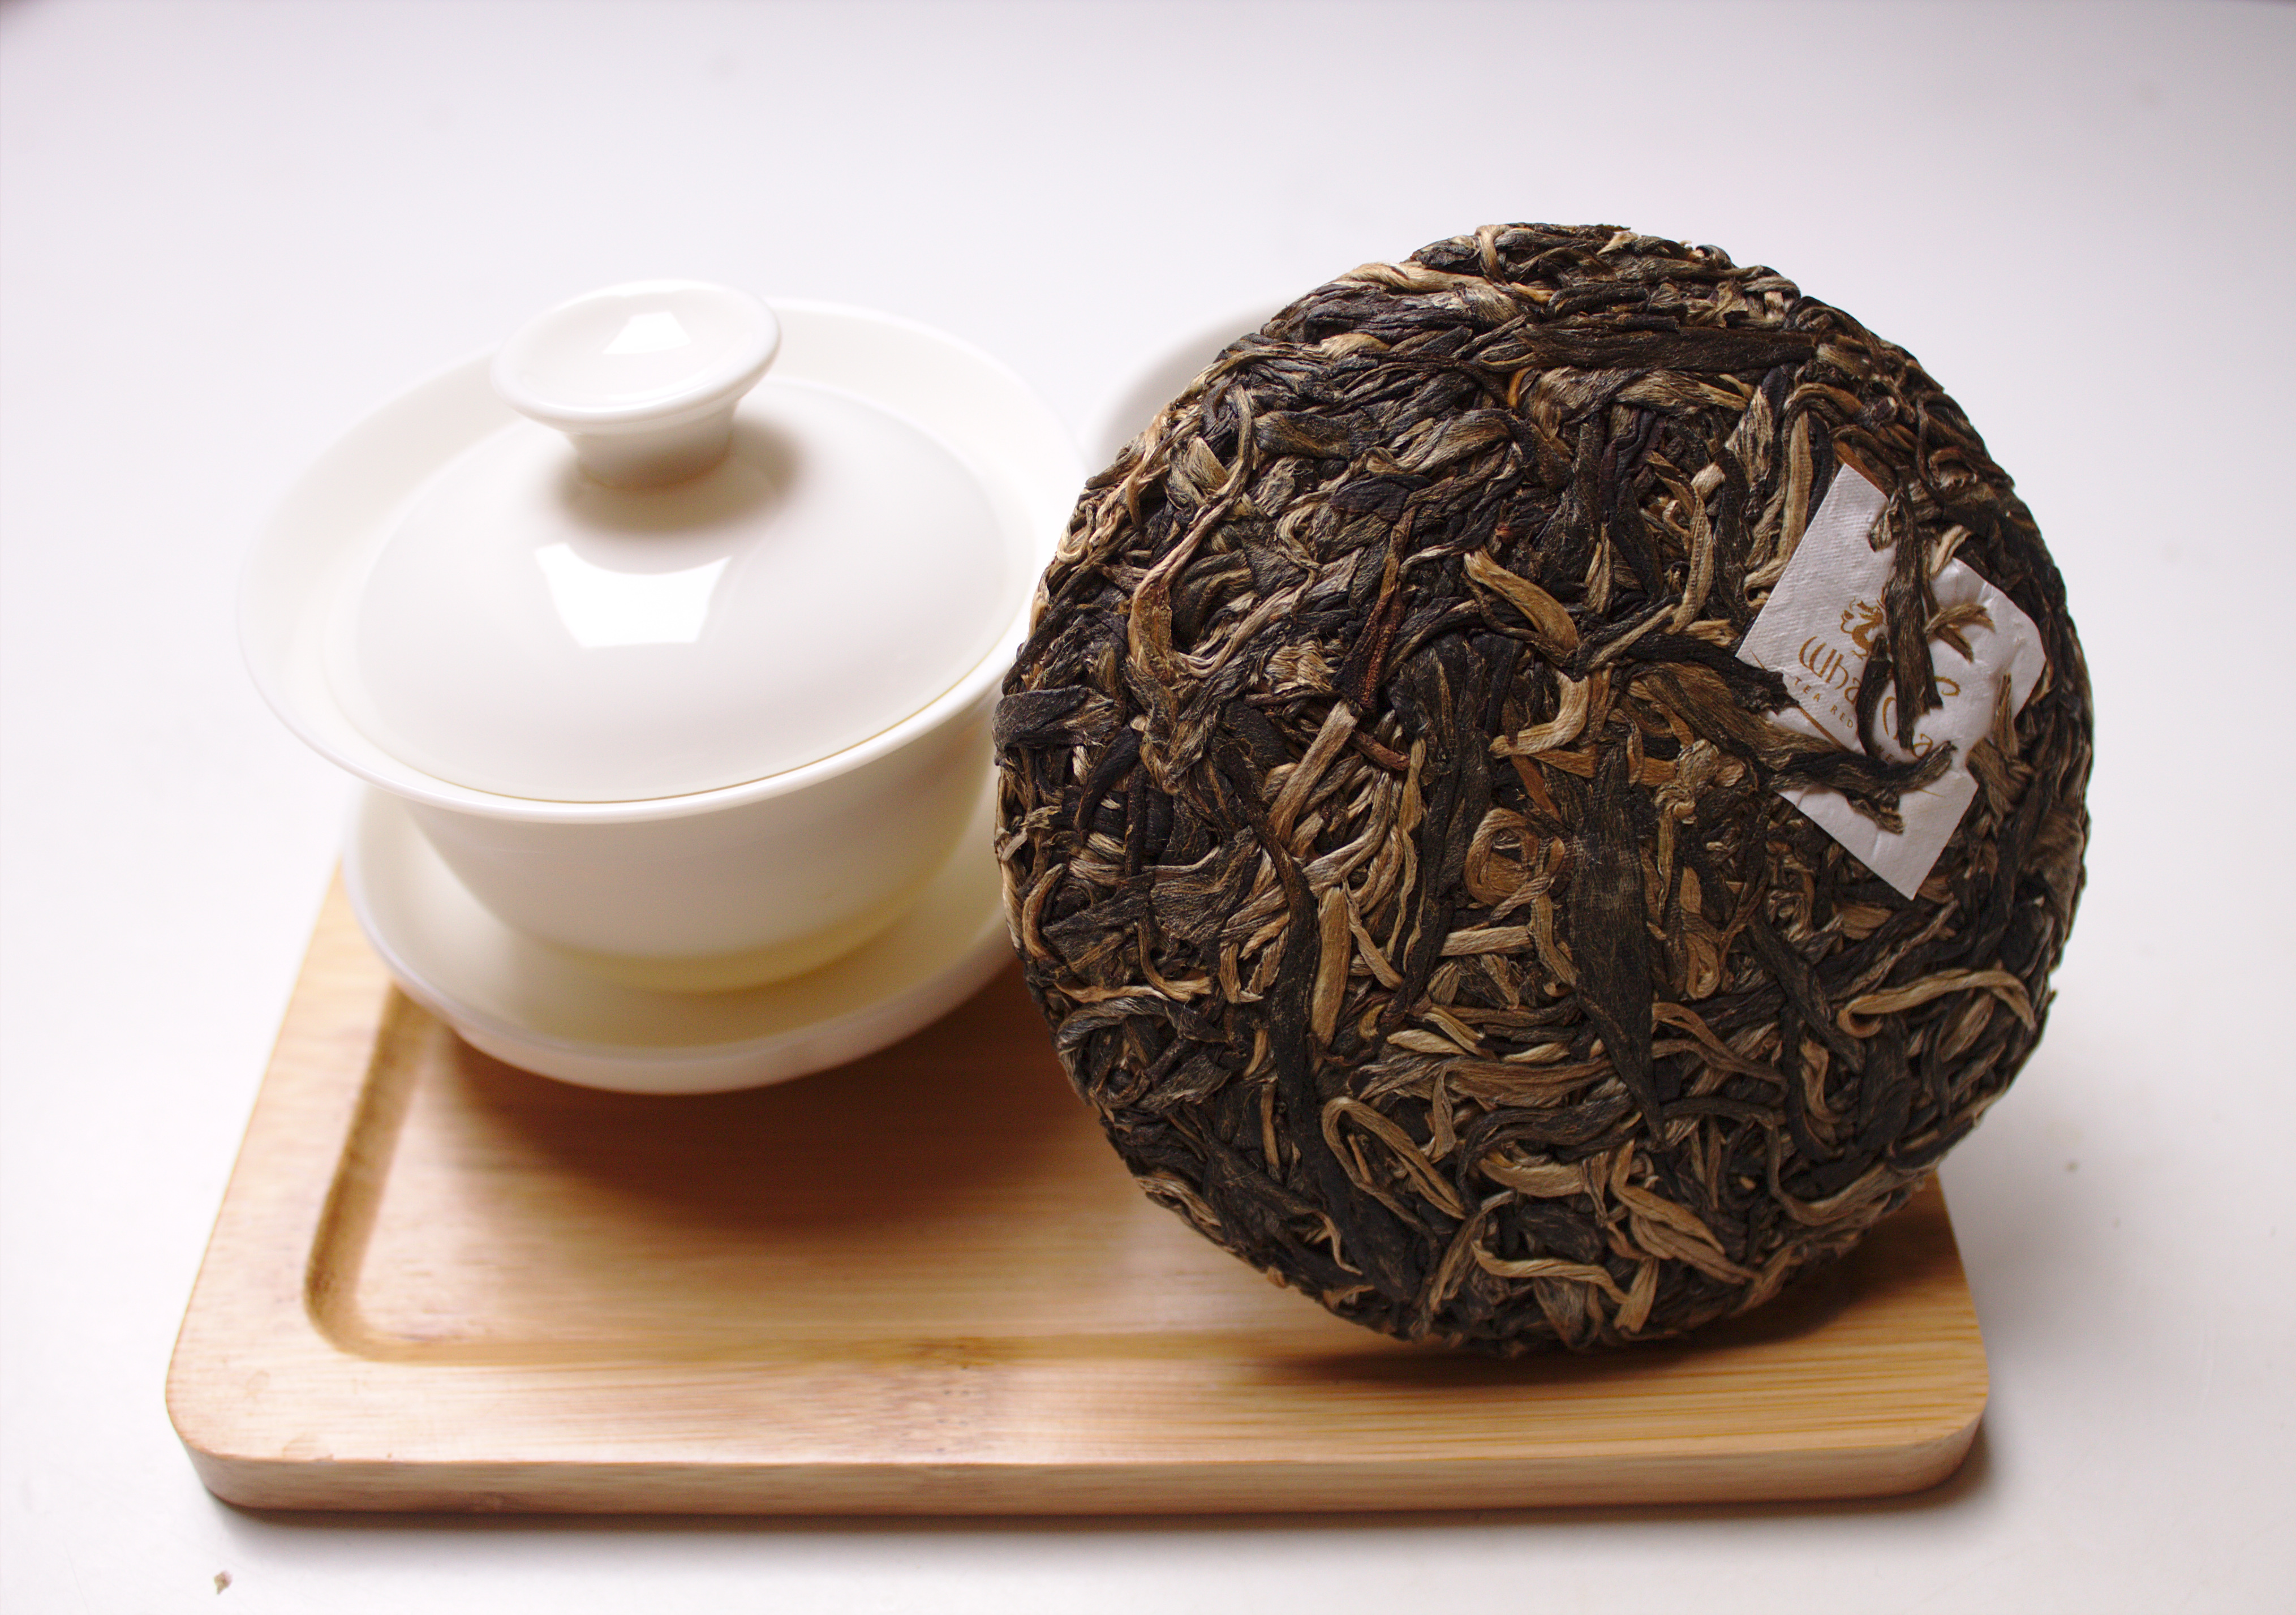 Пуэр. Шен пуэр чай эффект. Чай пуэр LAOSTEA 109 Sheng puer ban Komaen. Чай пуэр 茶 зеленый. Чай пуэр LAOSTEA 202 Spring Hills Sheng puer.